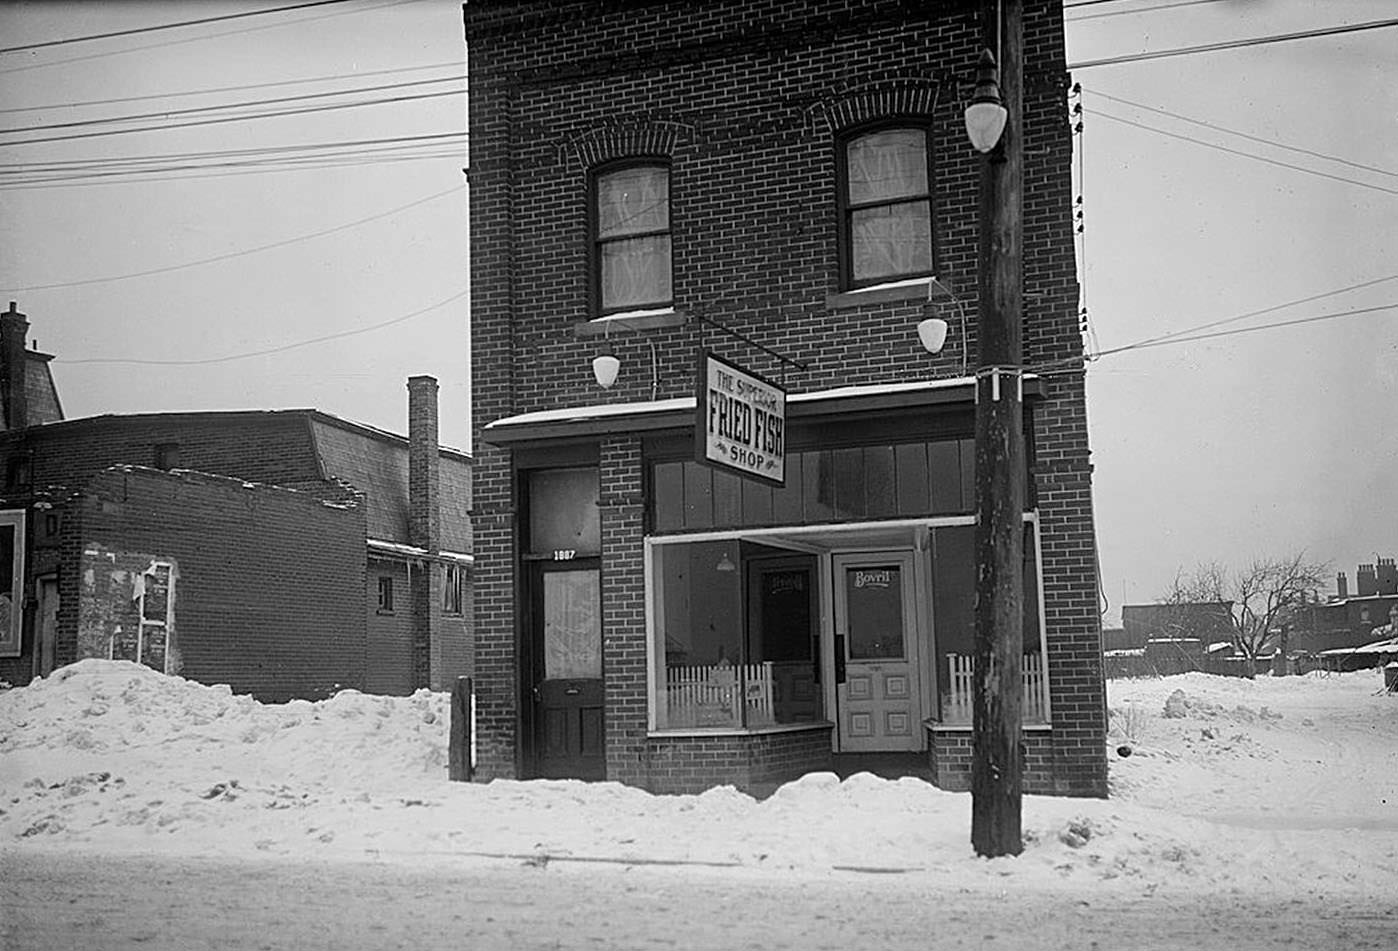 The Superior Fried Fish Shop, 1887 Yonge Street, Feb. 22, 1923.